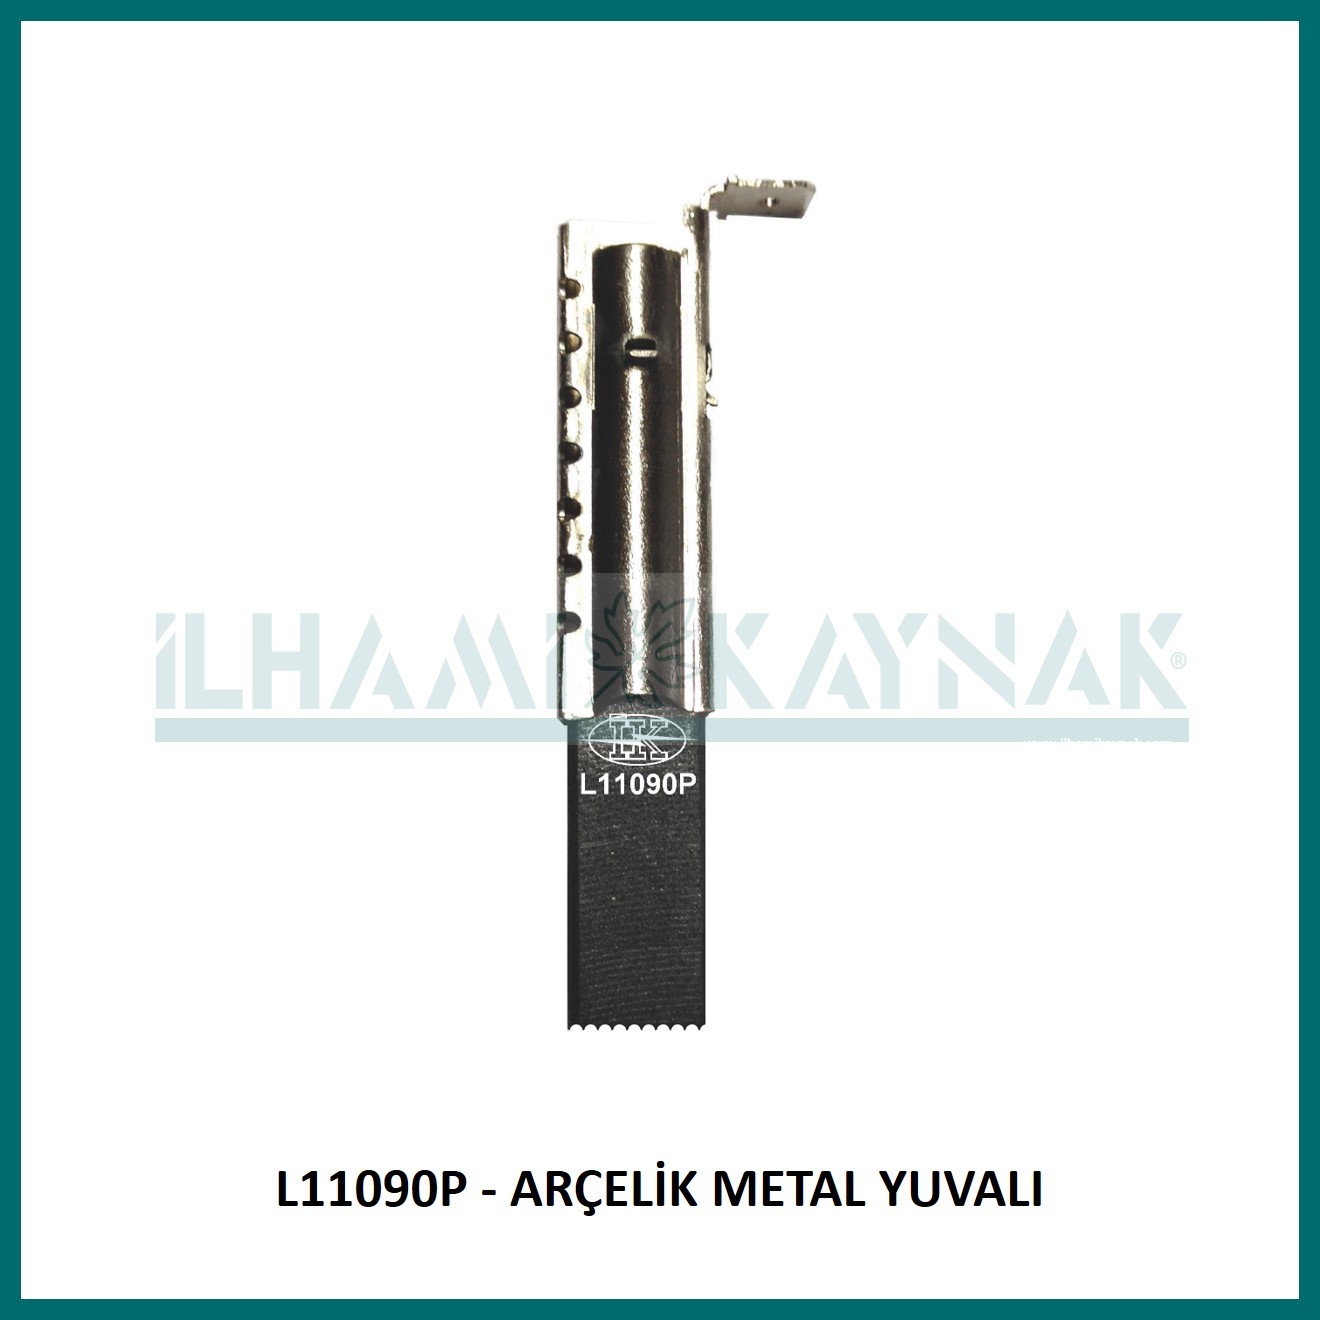 L11090P - ARÇELİK METAL YUVALI - 5*13.5*40 mm - 50 Adet